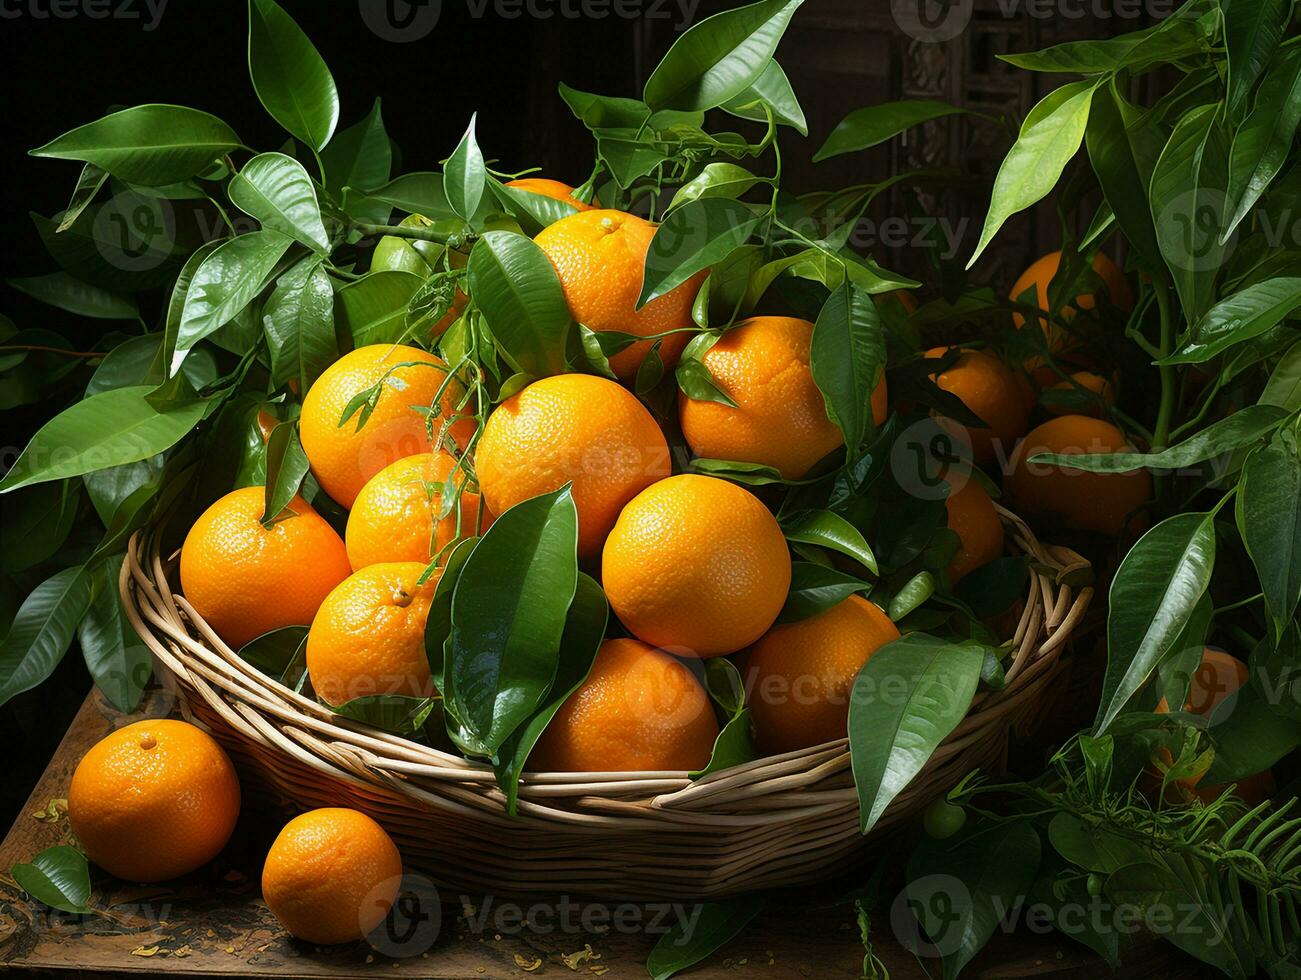 färsk ljuv orange innehåller vitamin c foto